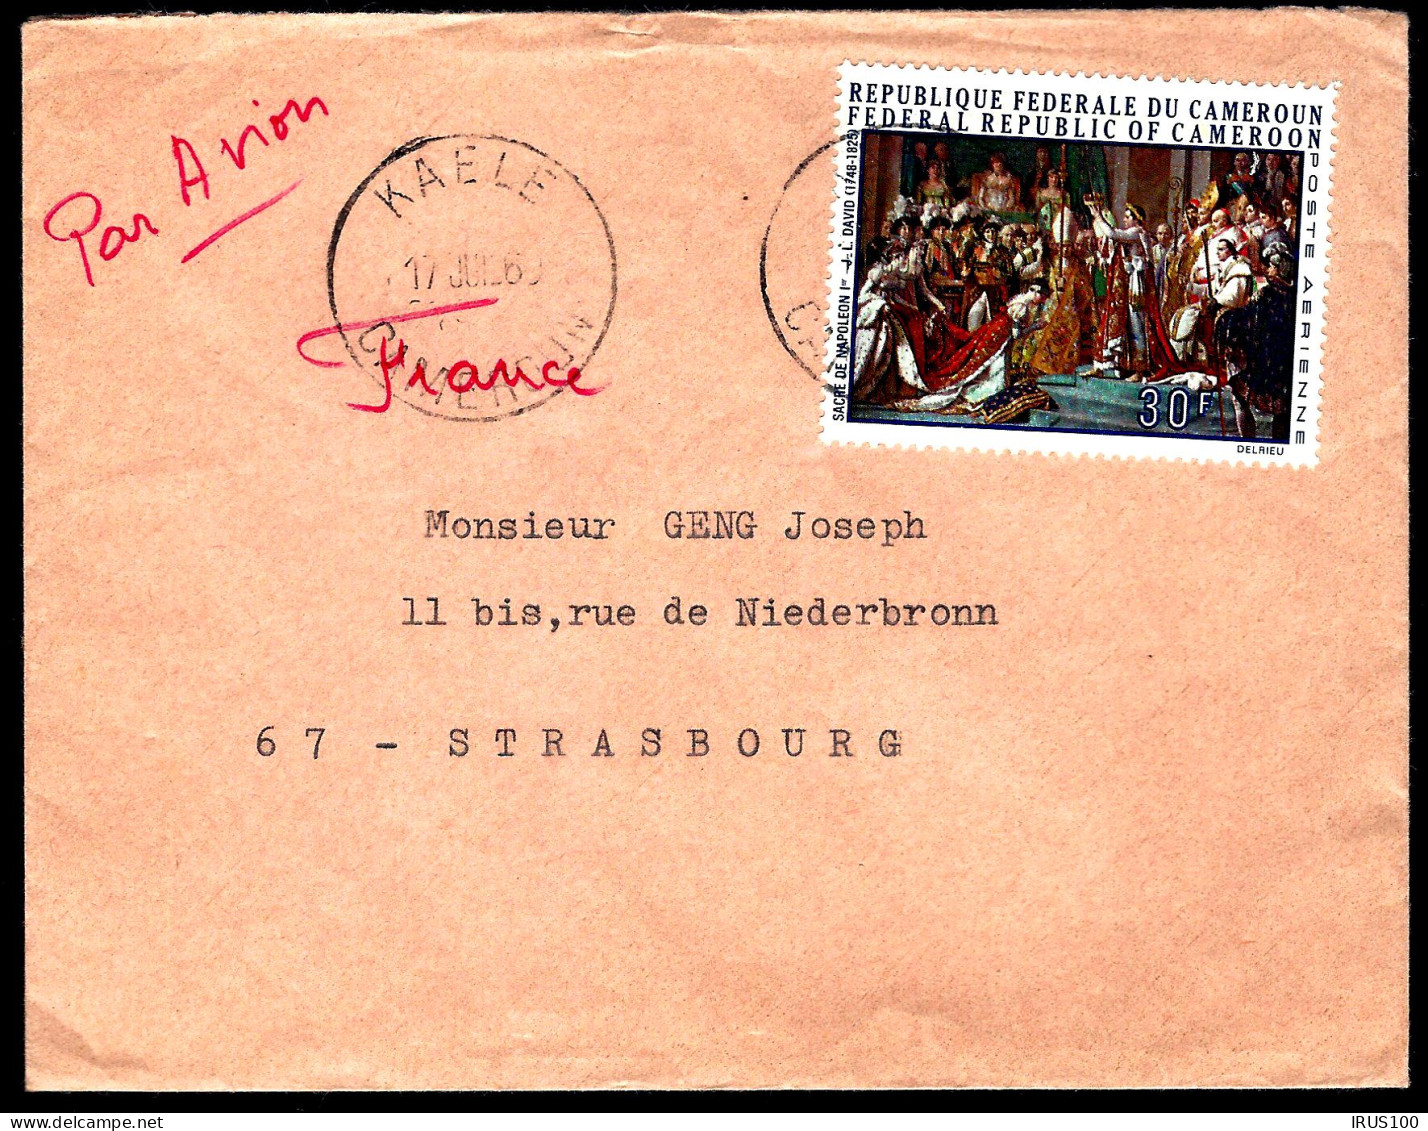 NAPOLÉON - RÉPUBLIQUE DU CAMEROUN - 1960 - POSTE ARIENNE - Napoléon